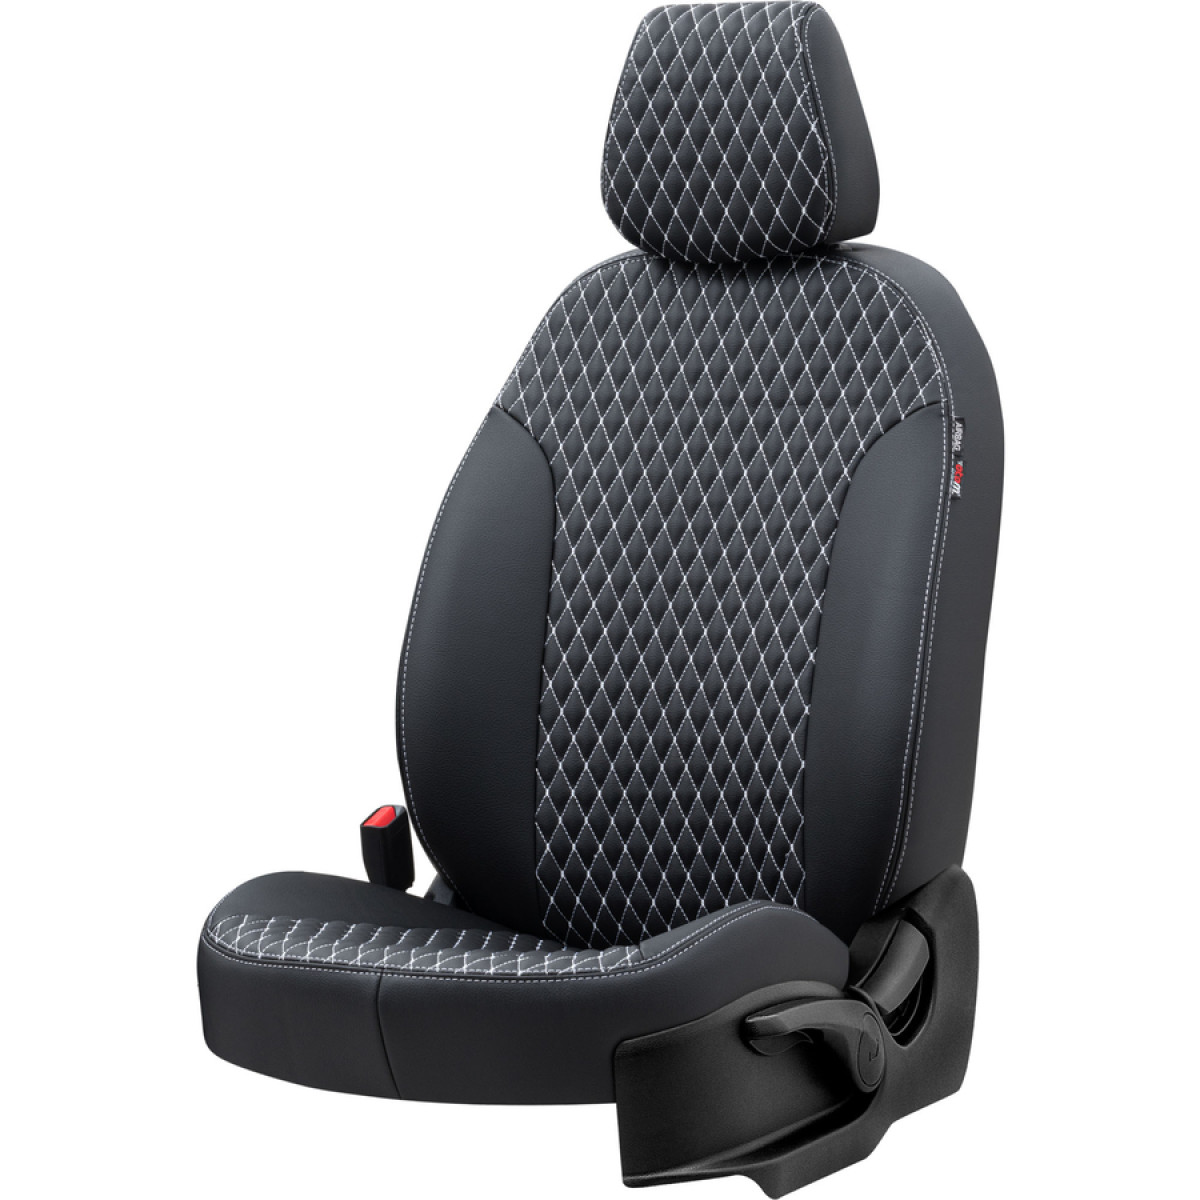 Amsterdam seat covers (eco leather) Volkswagen Passat B5